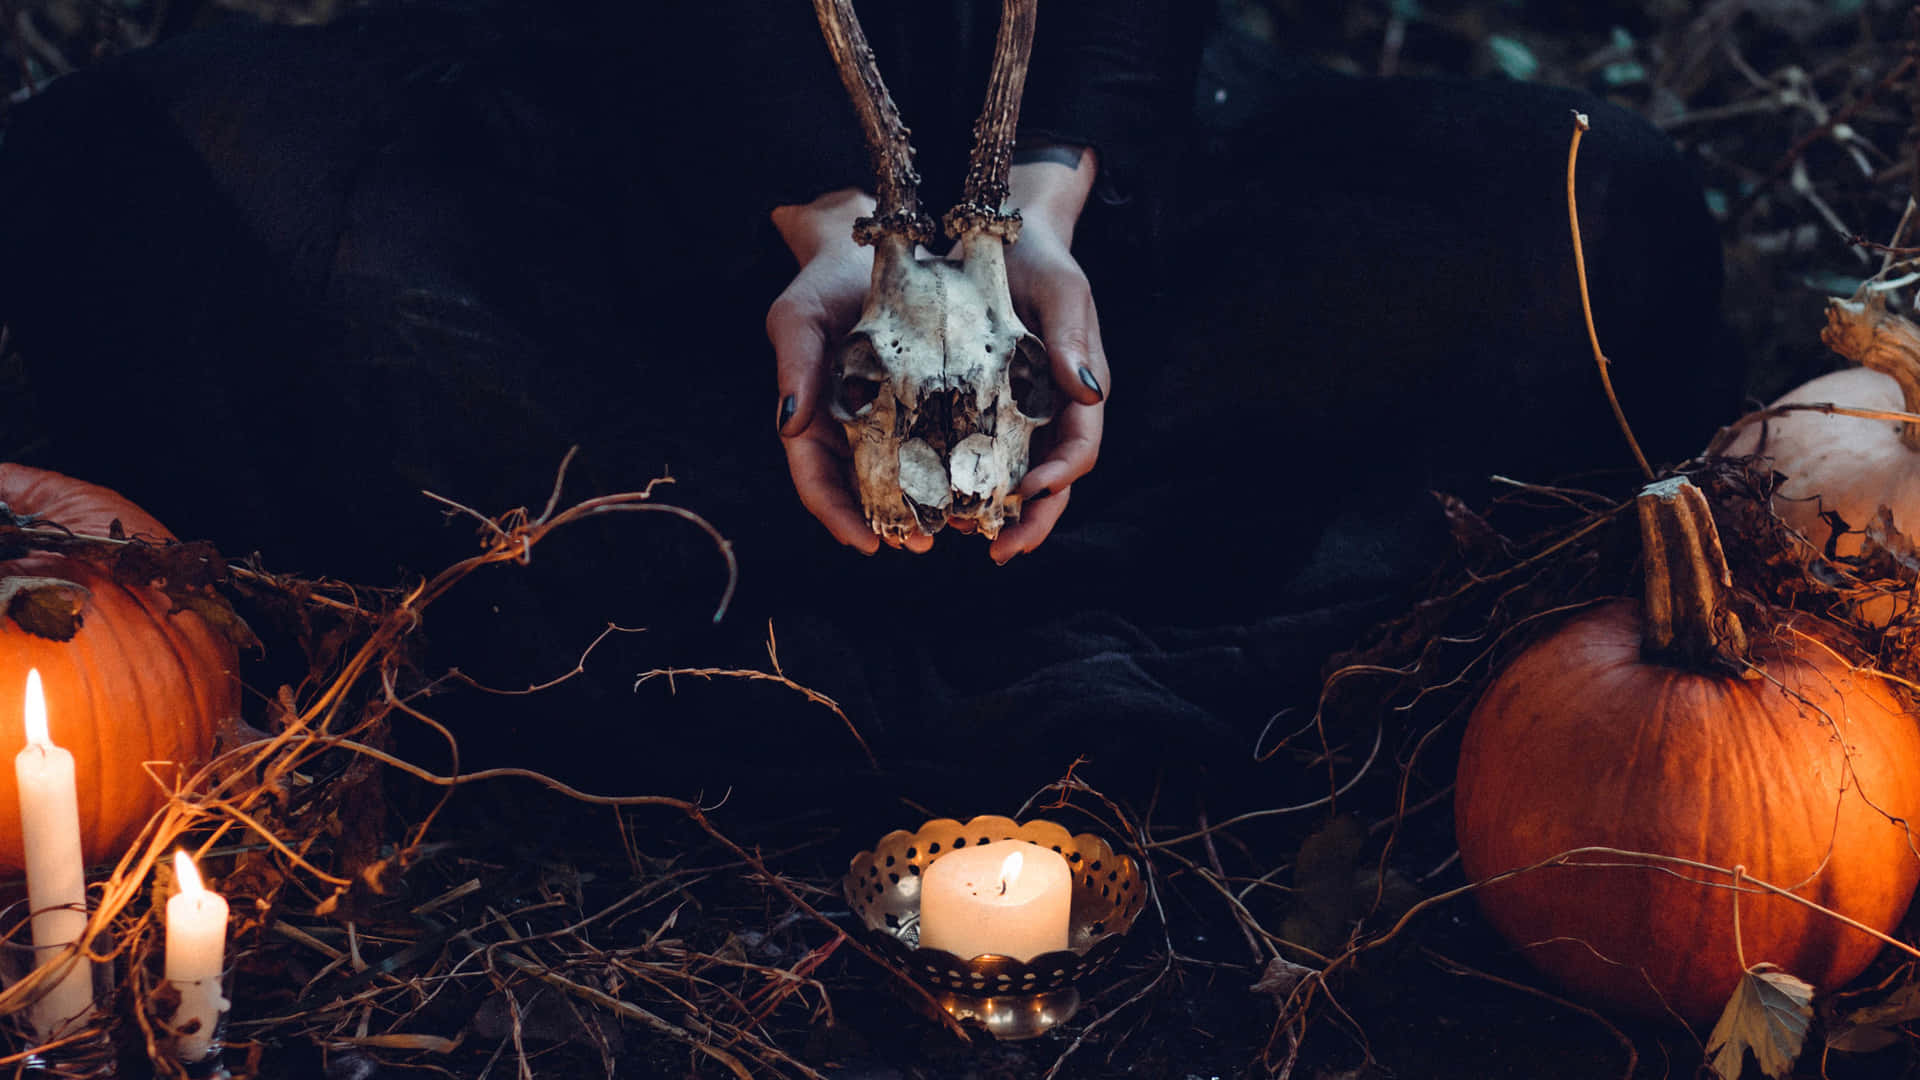 Dark Halloween Ritualwith Skulland Pumpkins Wallpaper